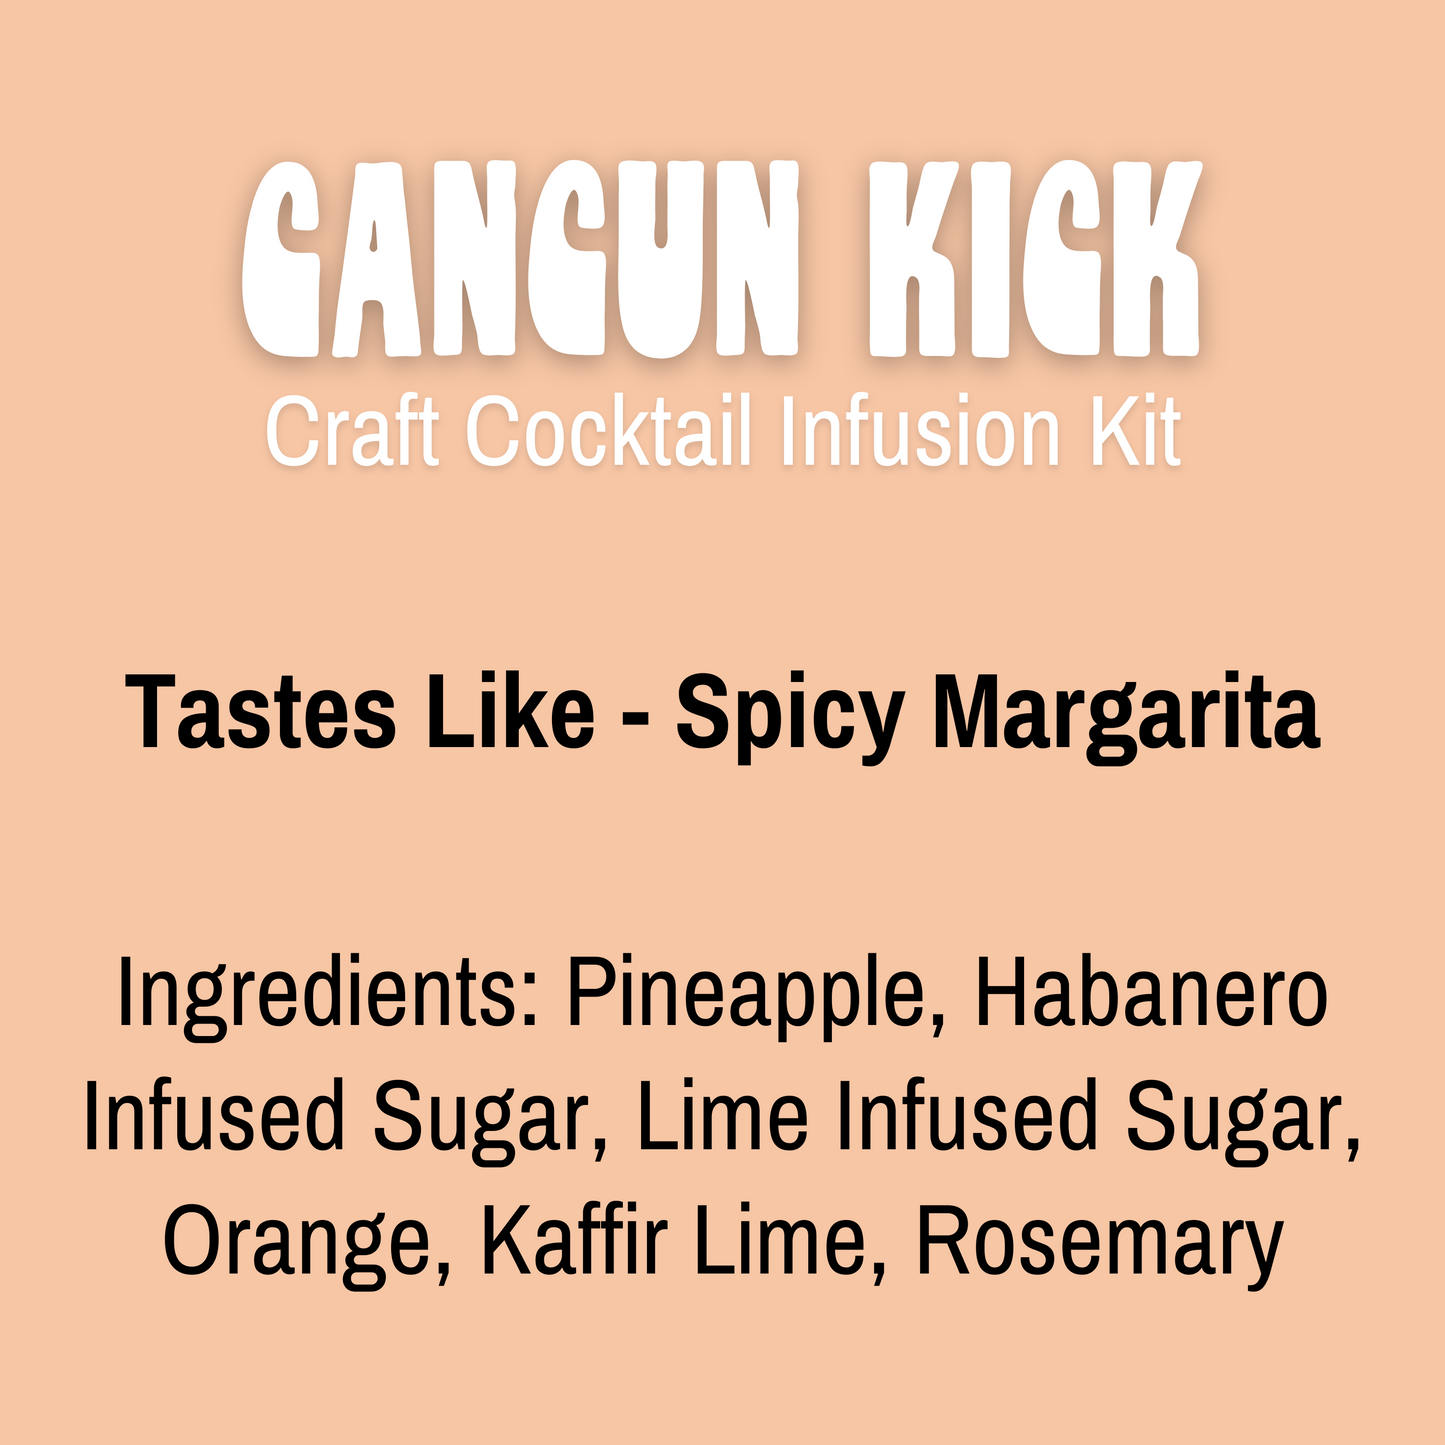 Cancun Kick Craft Cocktail Infusion Kit